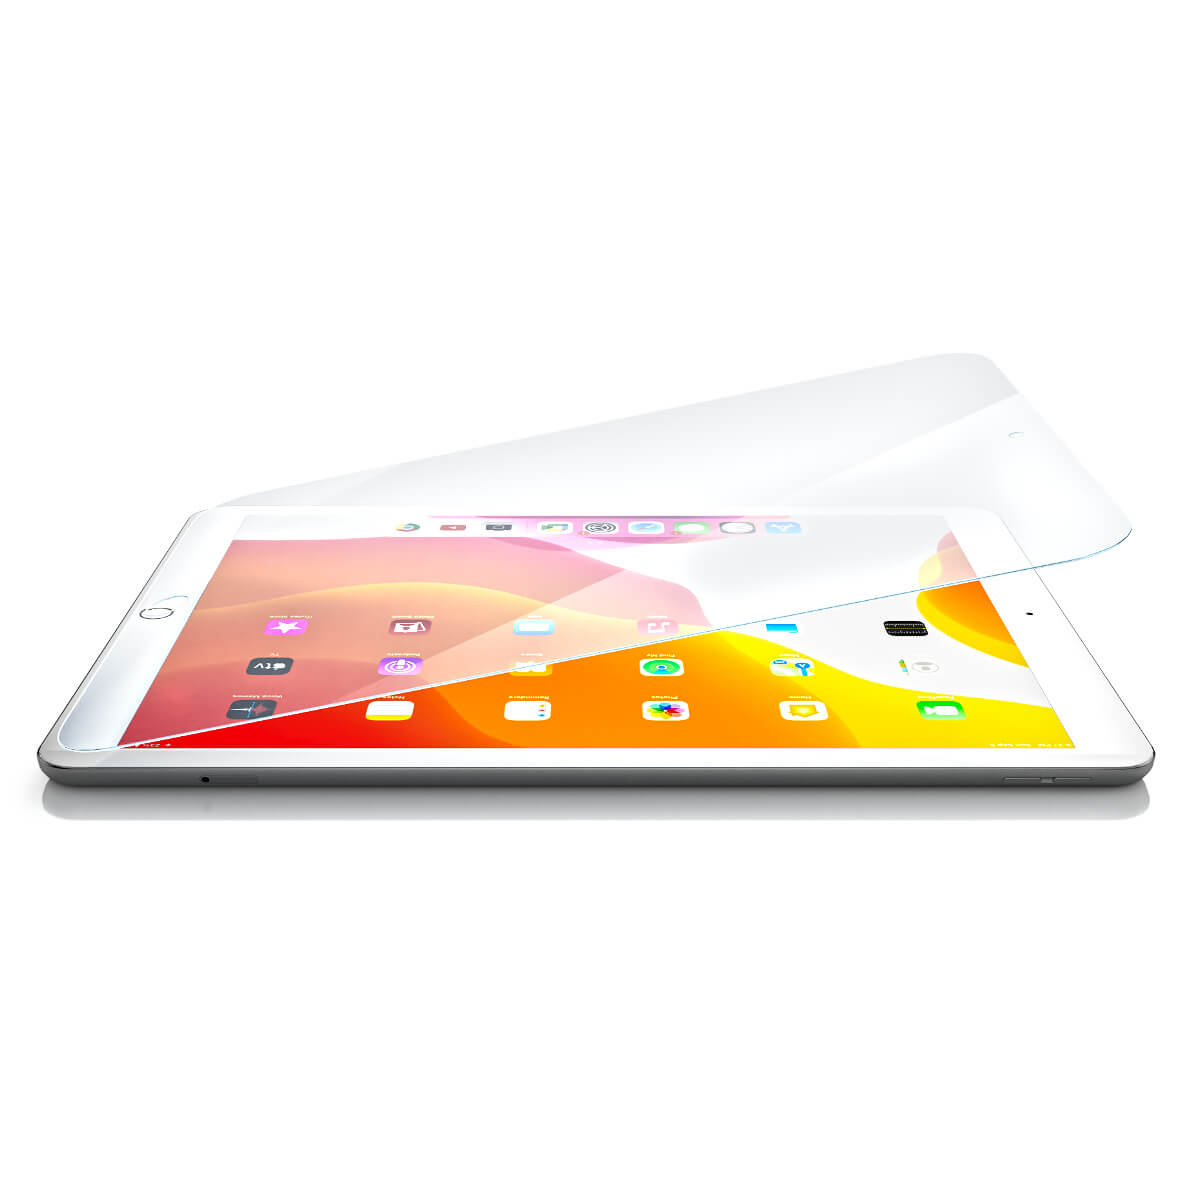 2x iPad 10.2 Screen Protector Tempered Glass | Hugmie